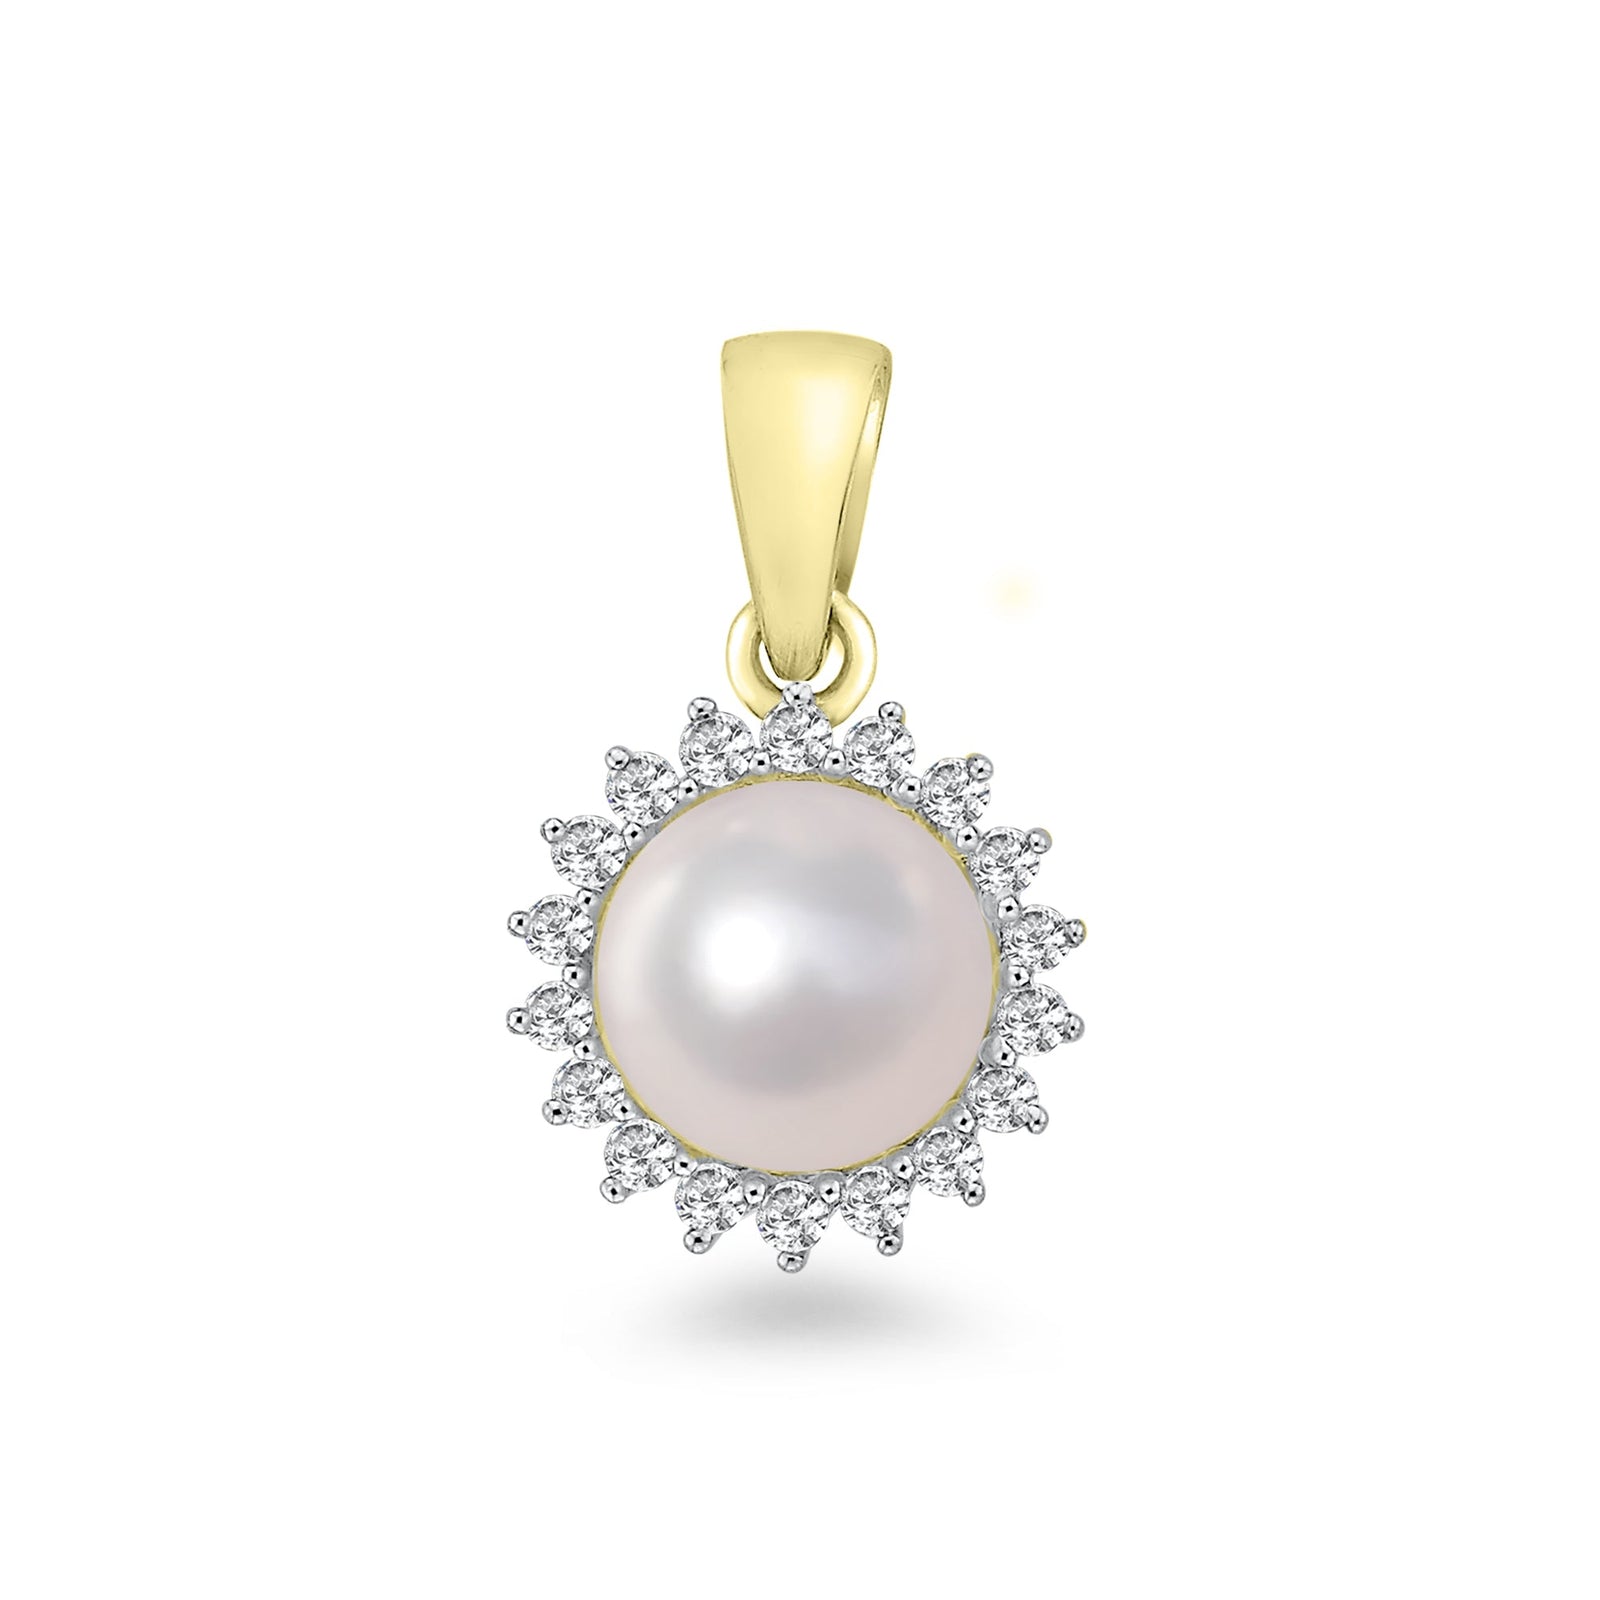 9ct gold 7mm cultured pearl & diamond pendant 0.15ct